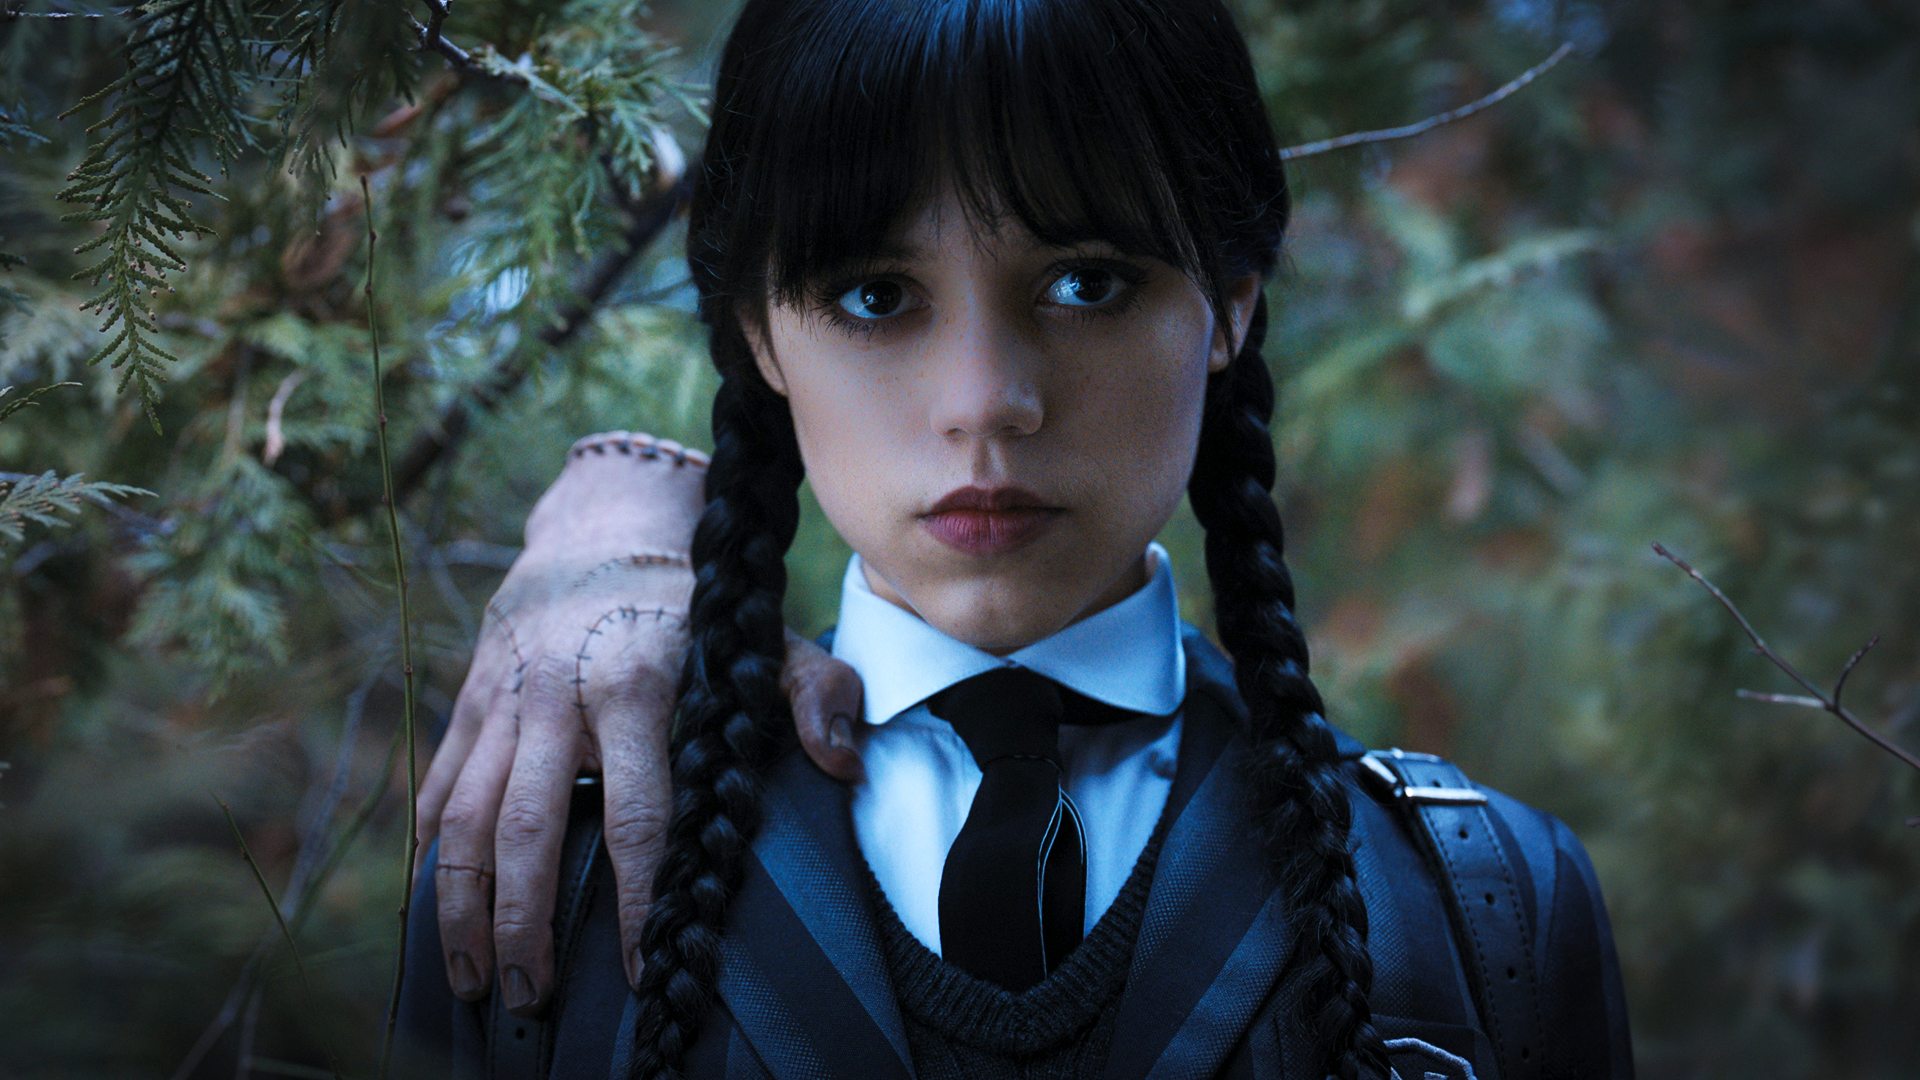 Who Dies in Alice in Borderland Season 2 on Netflix? - GameRevolution